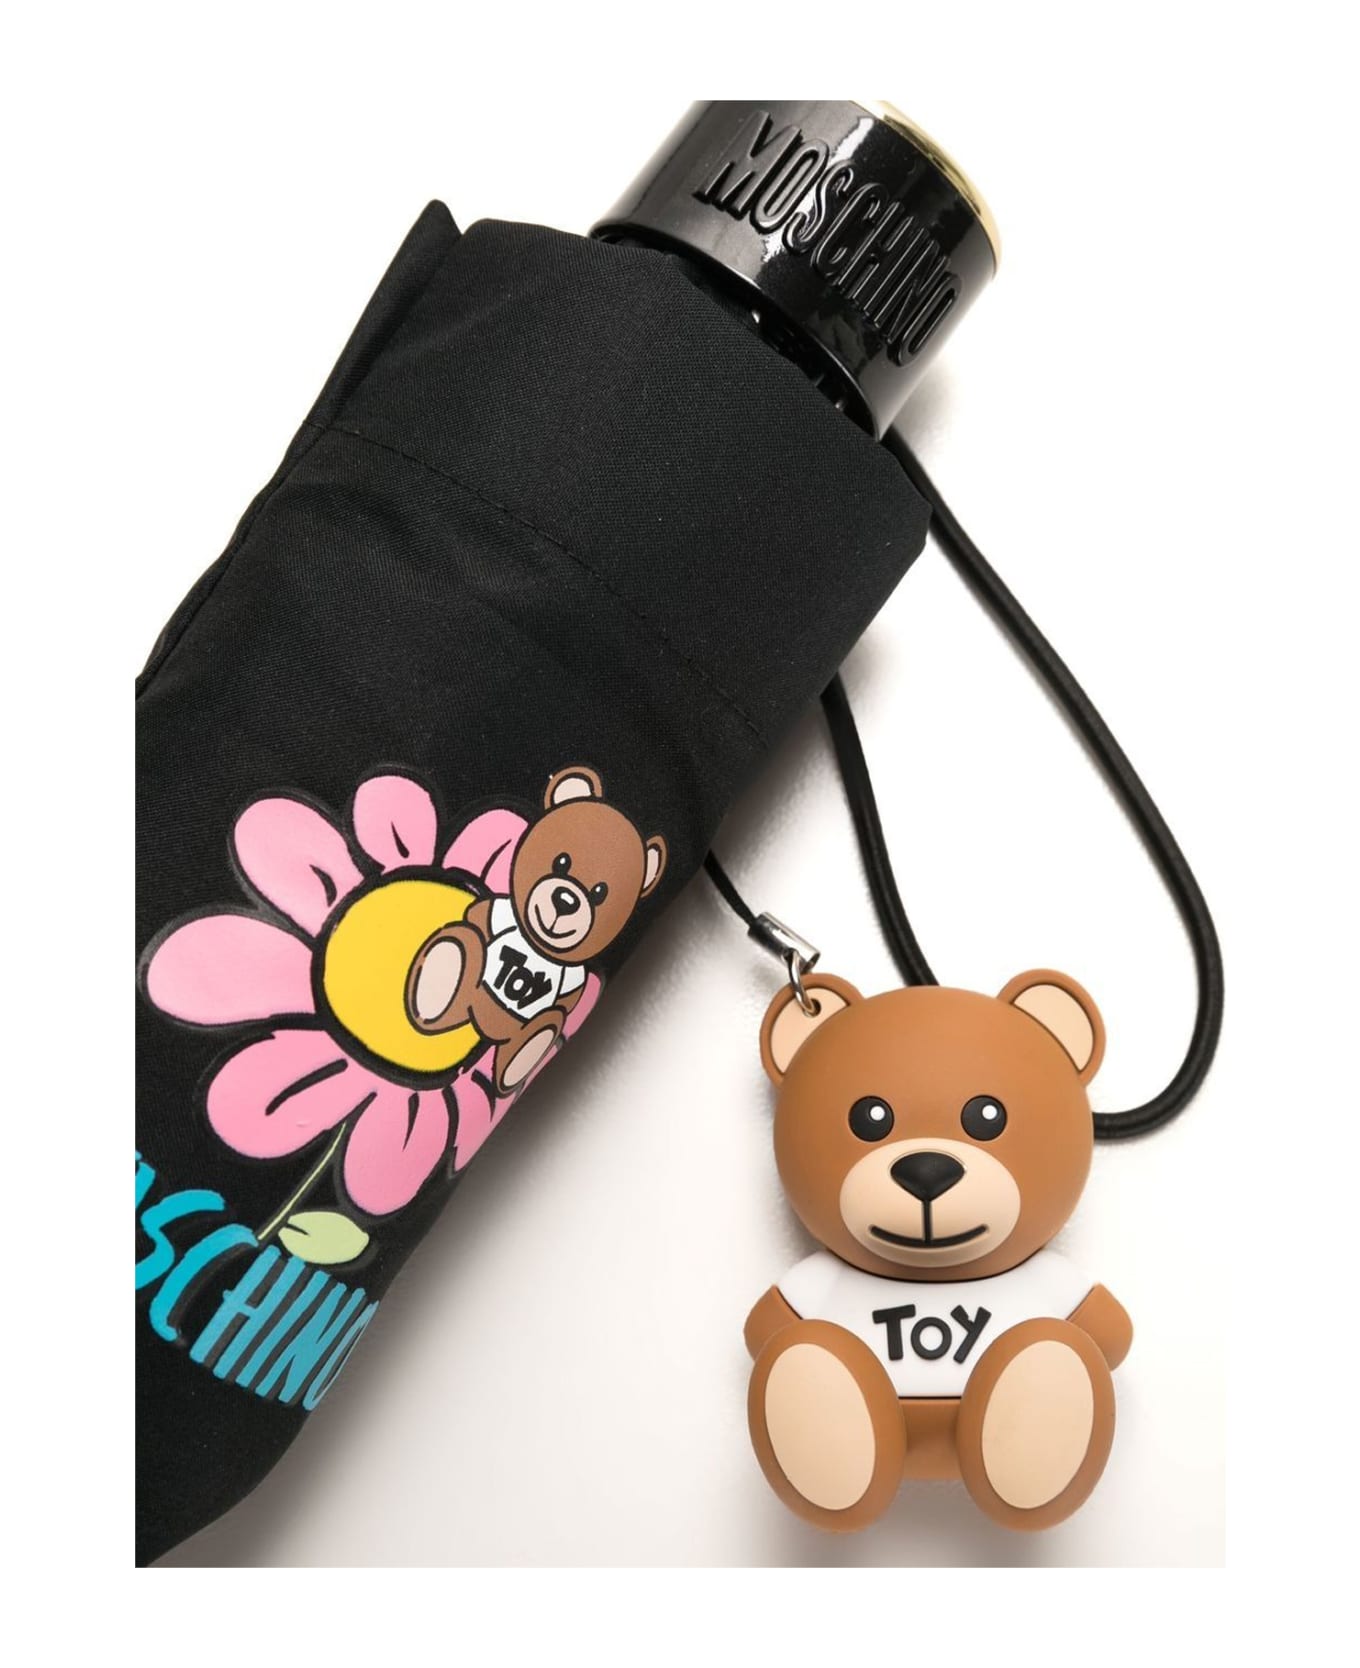 Moschino Flower Bear With Pendant Teddy Supermini Umbrella - A Black Pendant Teddy